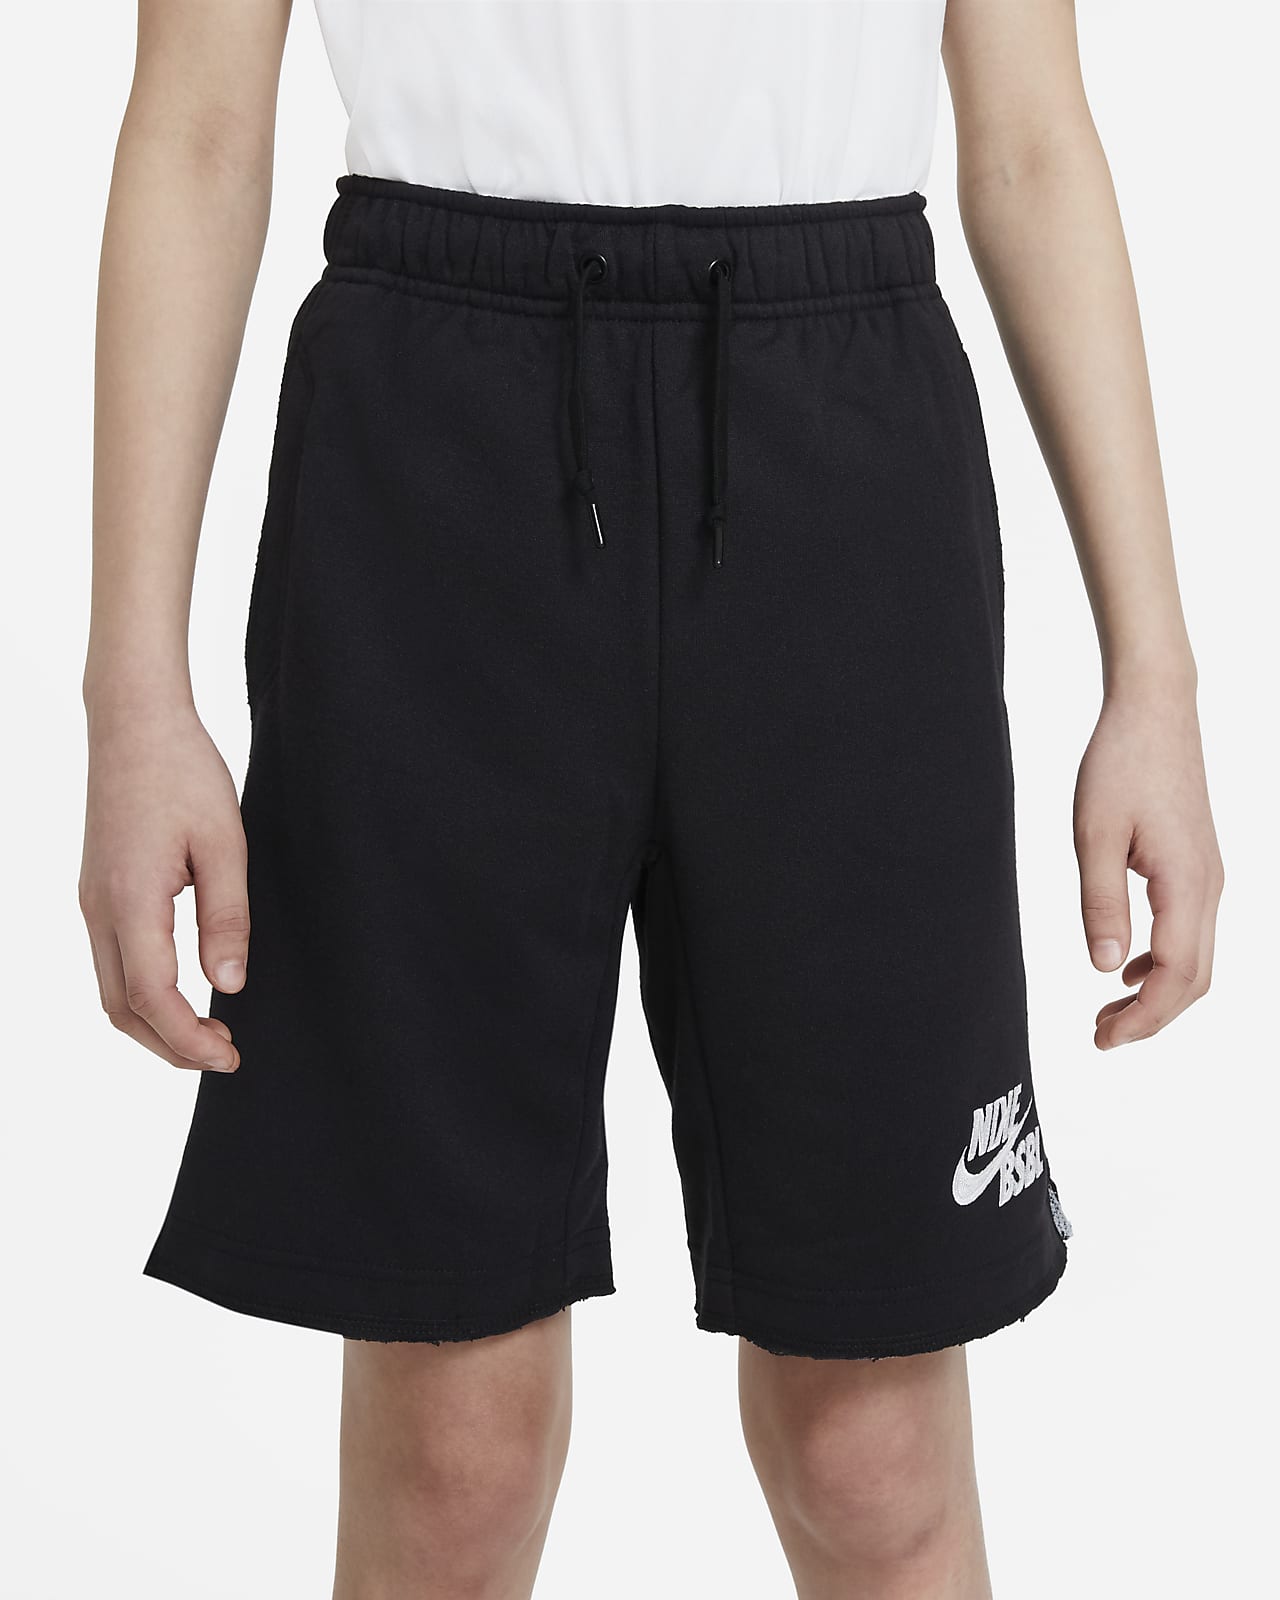 shorts for boys nike